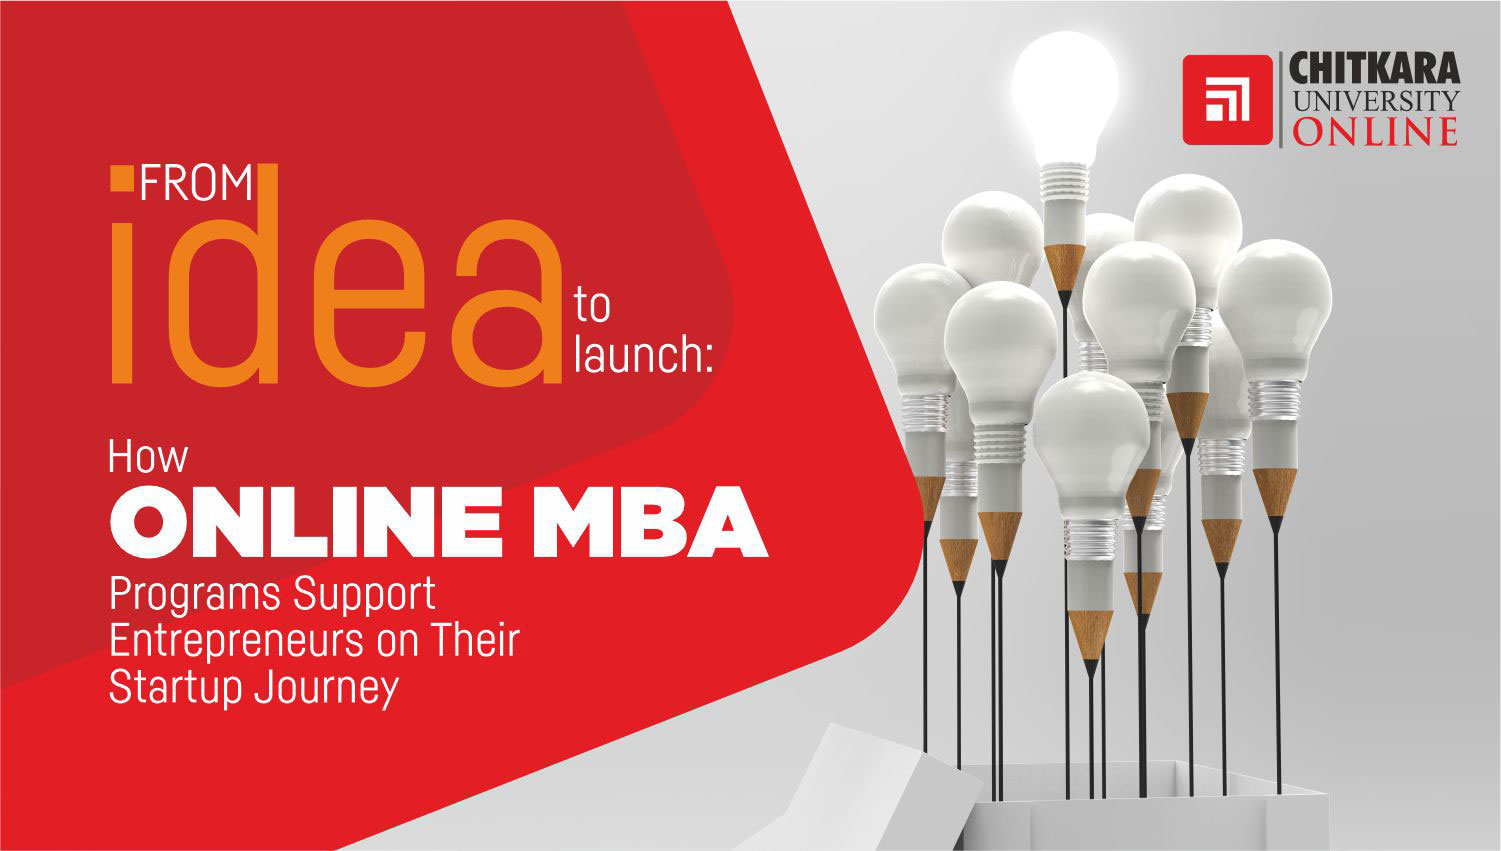 Online MBA can help Entrepreneurs